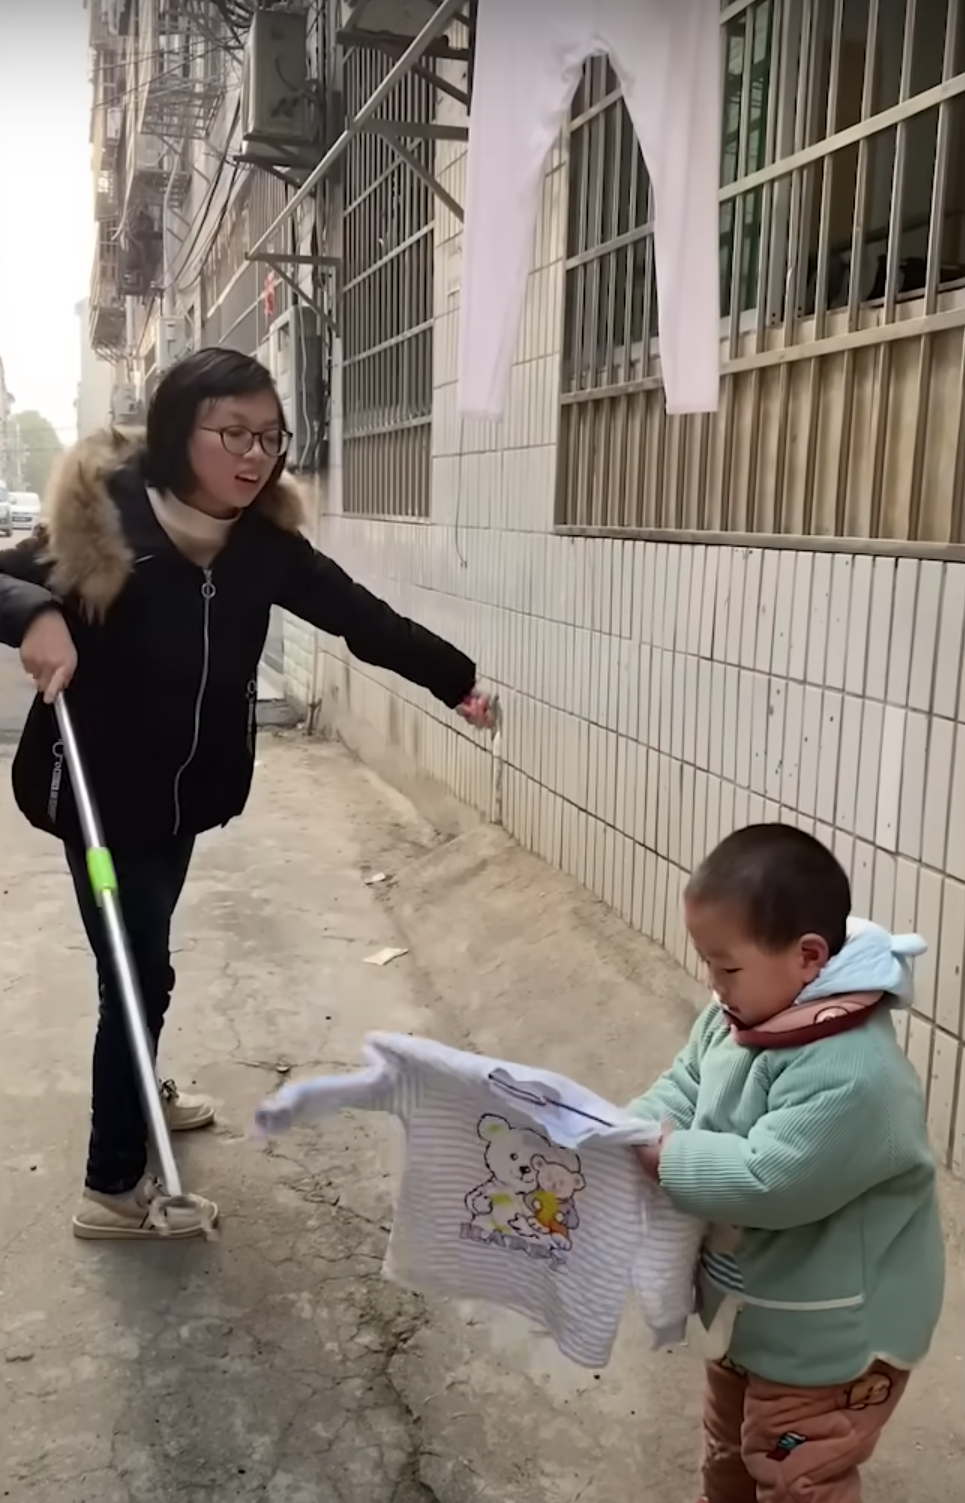 Pomelo aide sa mère à faire la lessive. | Source : Youtube.com/South China Morning Post